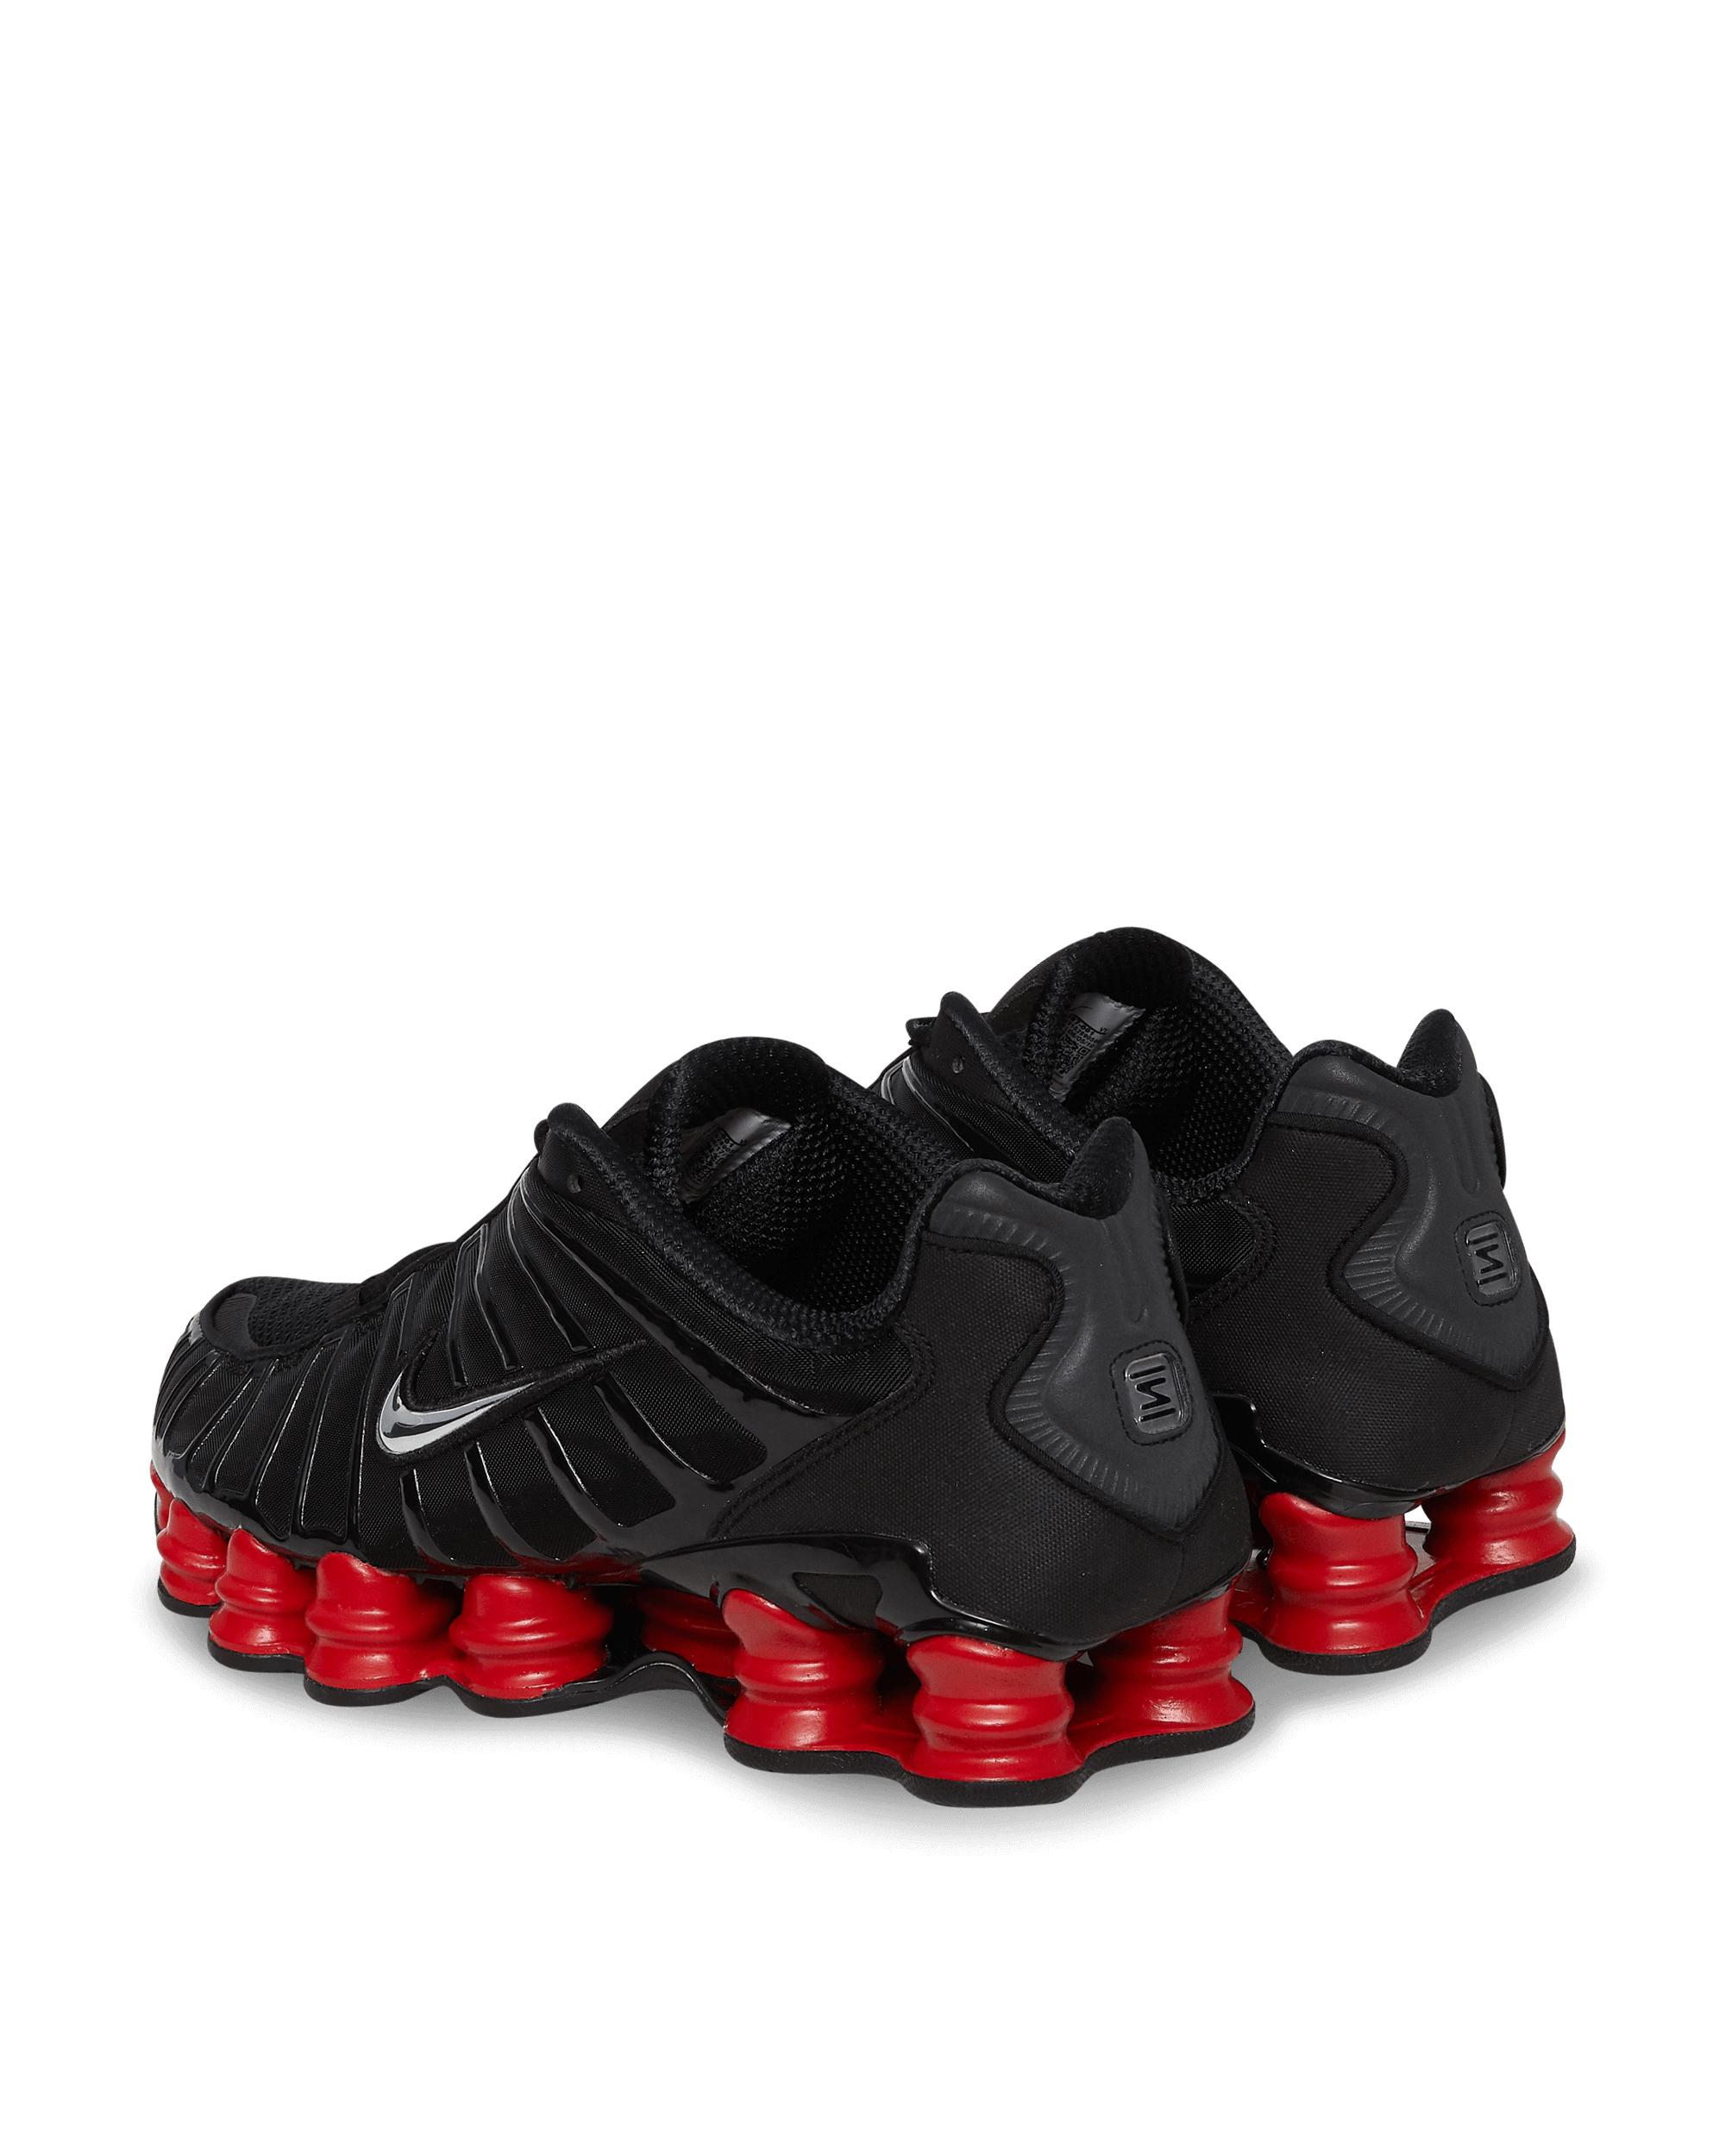 Nike Synthetic X Skepta Shox in Black/Silver/Red (Black) for Men - Lyst